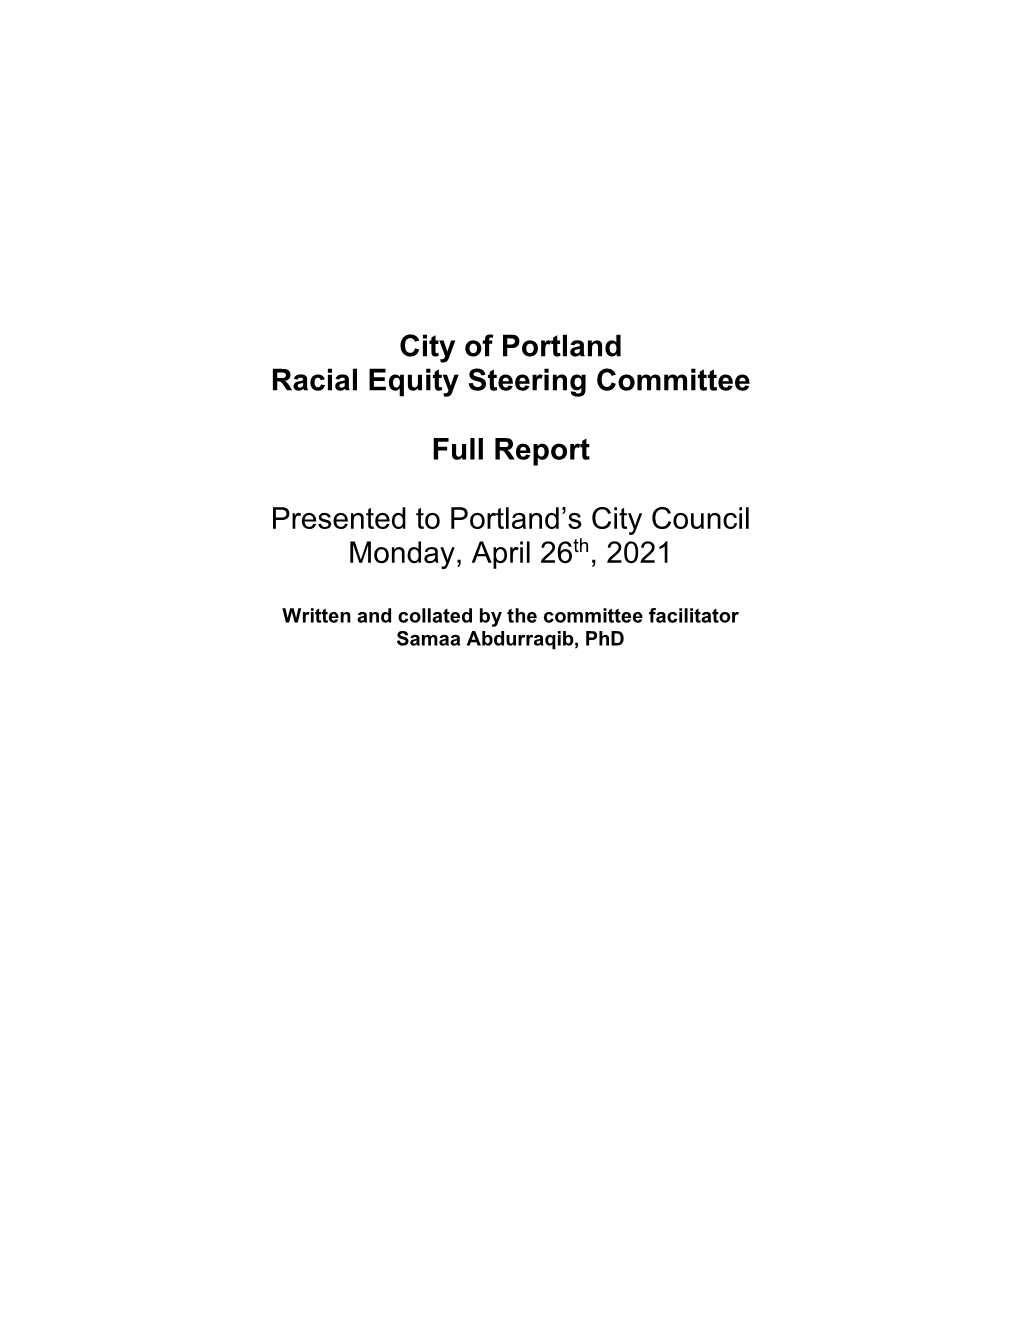 City of Portland Racial Equity Steering Committee Full Report Presented